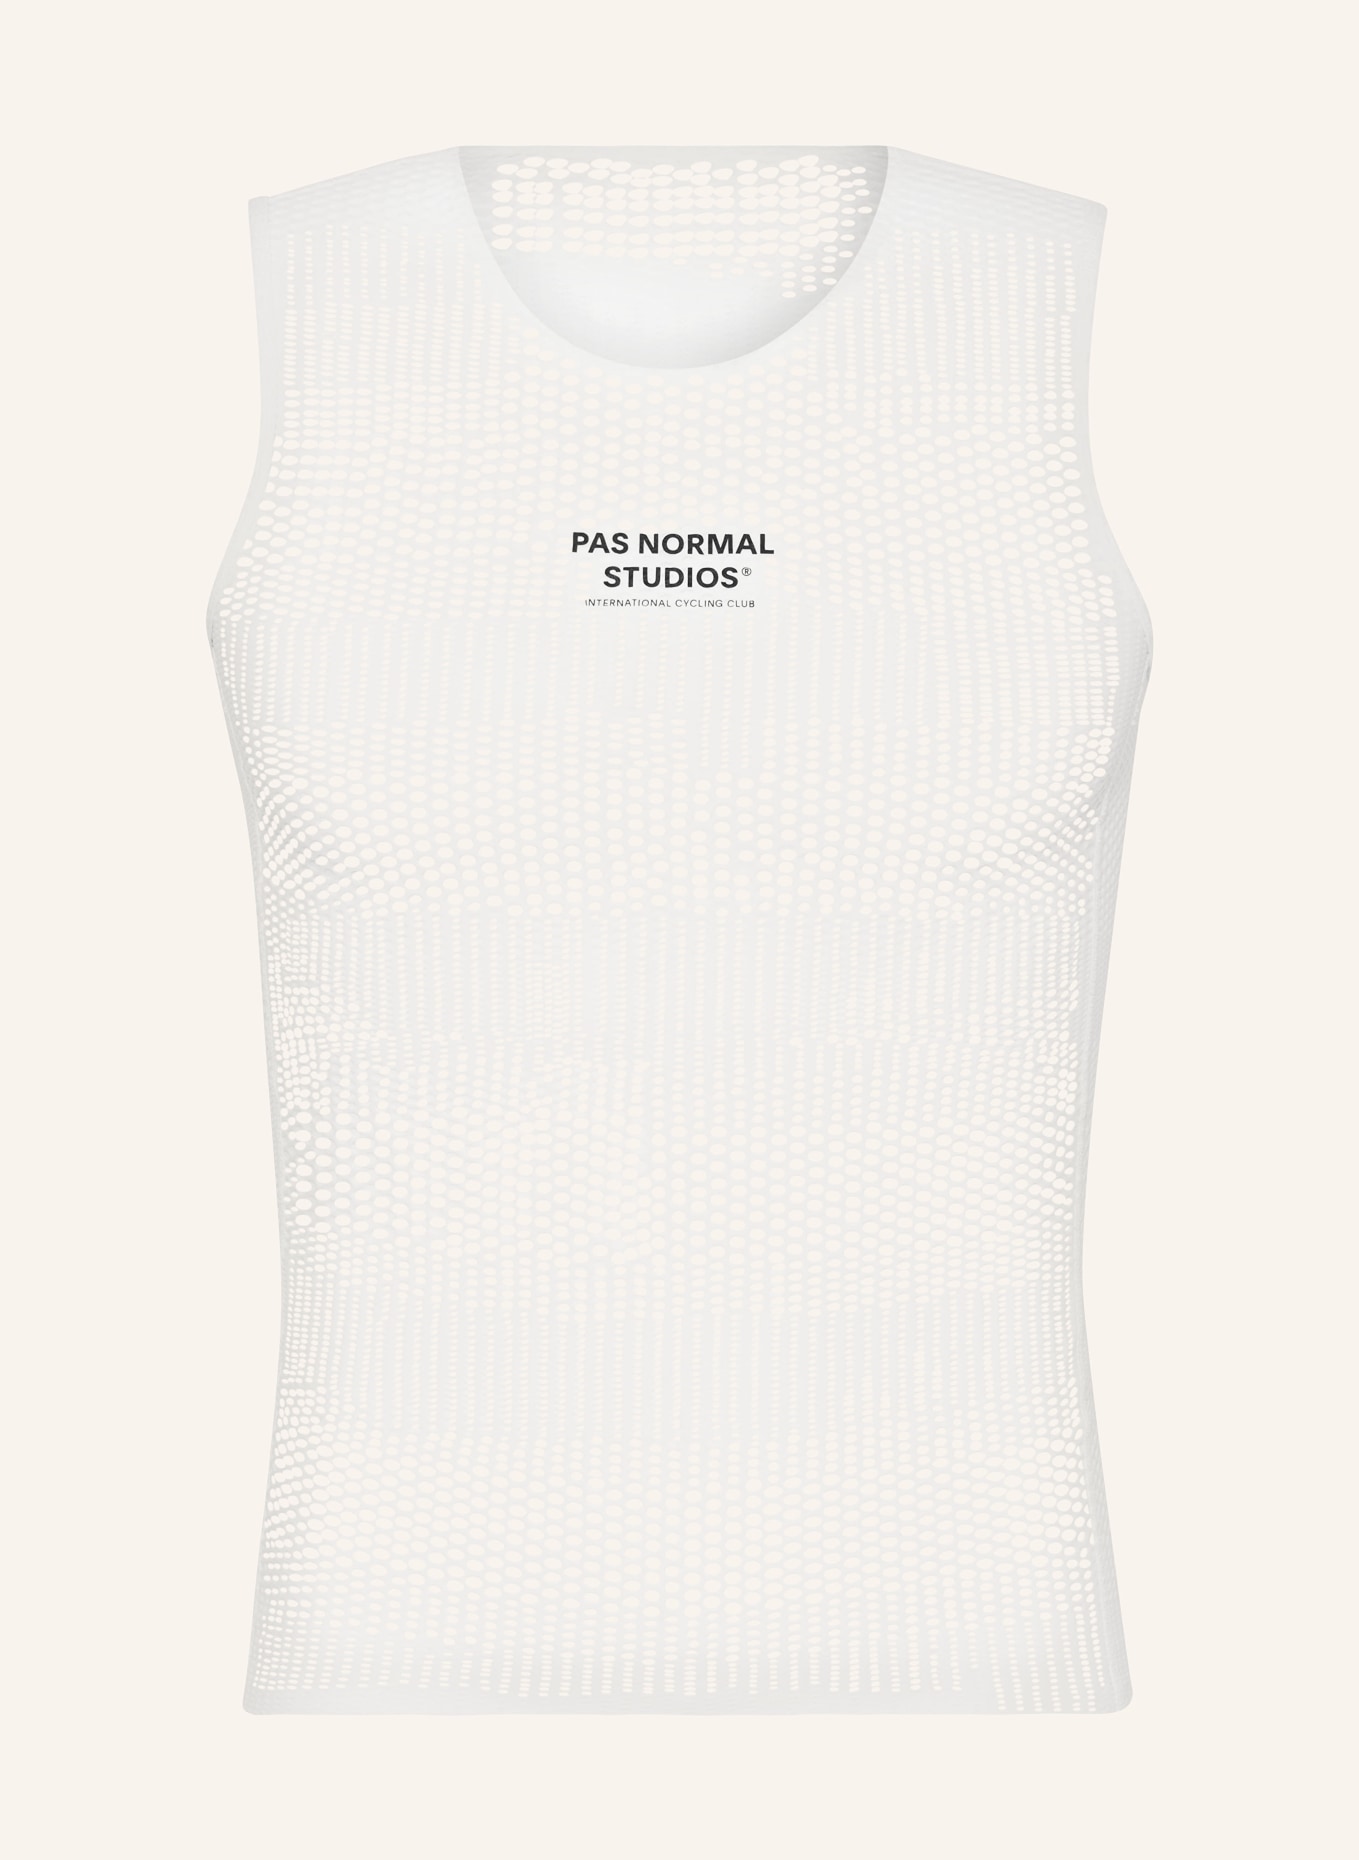 PAS NORMAL STUDIOS Functional underwear top MECHANISM PRO, Color: WHITE (Image 1)